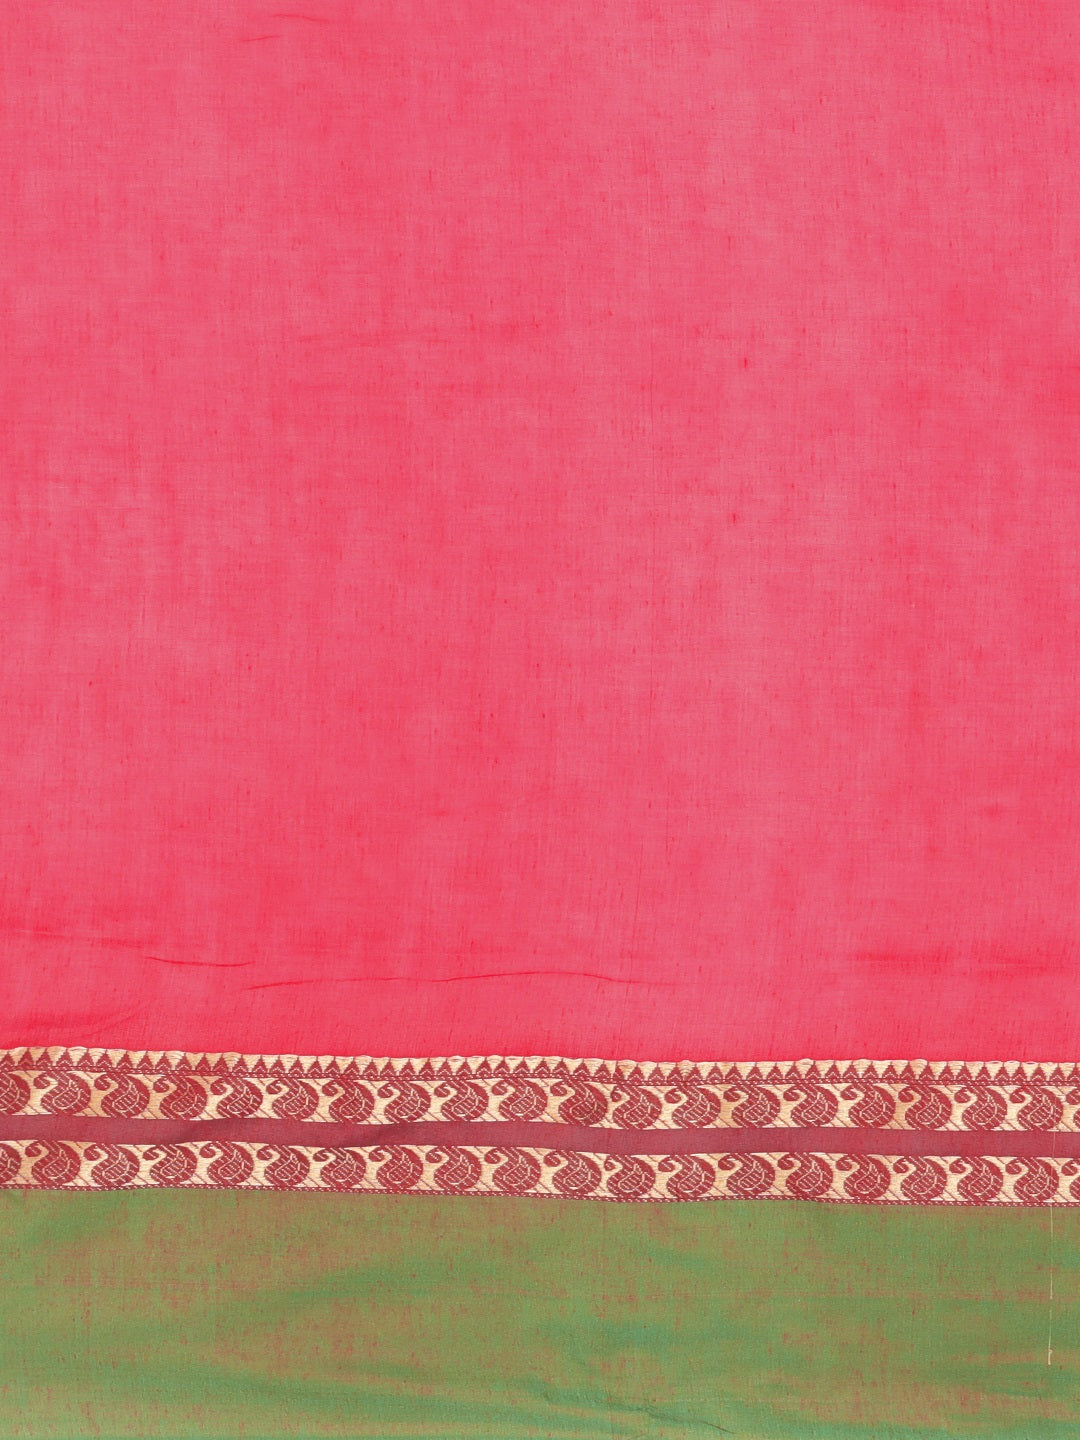 Red Jamdani Woven Design Saree With Blouse Piece SHBESA0075 SHBESA0075-Saree-Kalakari India-SHBESA0075-Geographical Indication, Hand Crafted, Handloom, Heritage Prints, Jamdani, Natural Dyes, Pure Cotton, Sarees, Sustainable Fabrics, West Bengal, Woven-[Linen,Ethnic,wear,Fashionista,Handloom,Handicraft,Indigo,blockprint,block,print,Cotton,Chanderi,Blue, latest,classy,party,bollywood,trendy,summer,style,traditional,formal,elegant,unique,style,hand,block,print, dabu,booti,gift,present,glamorous,af